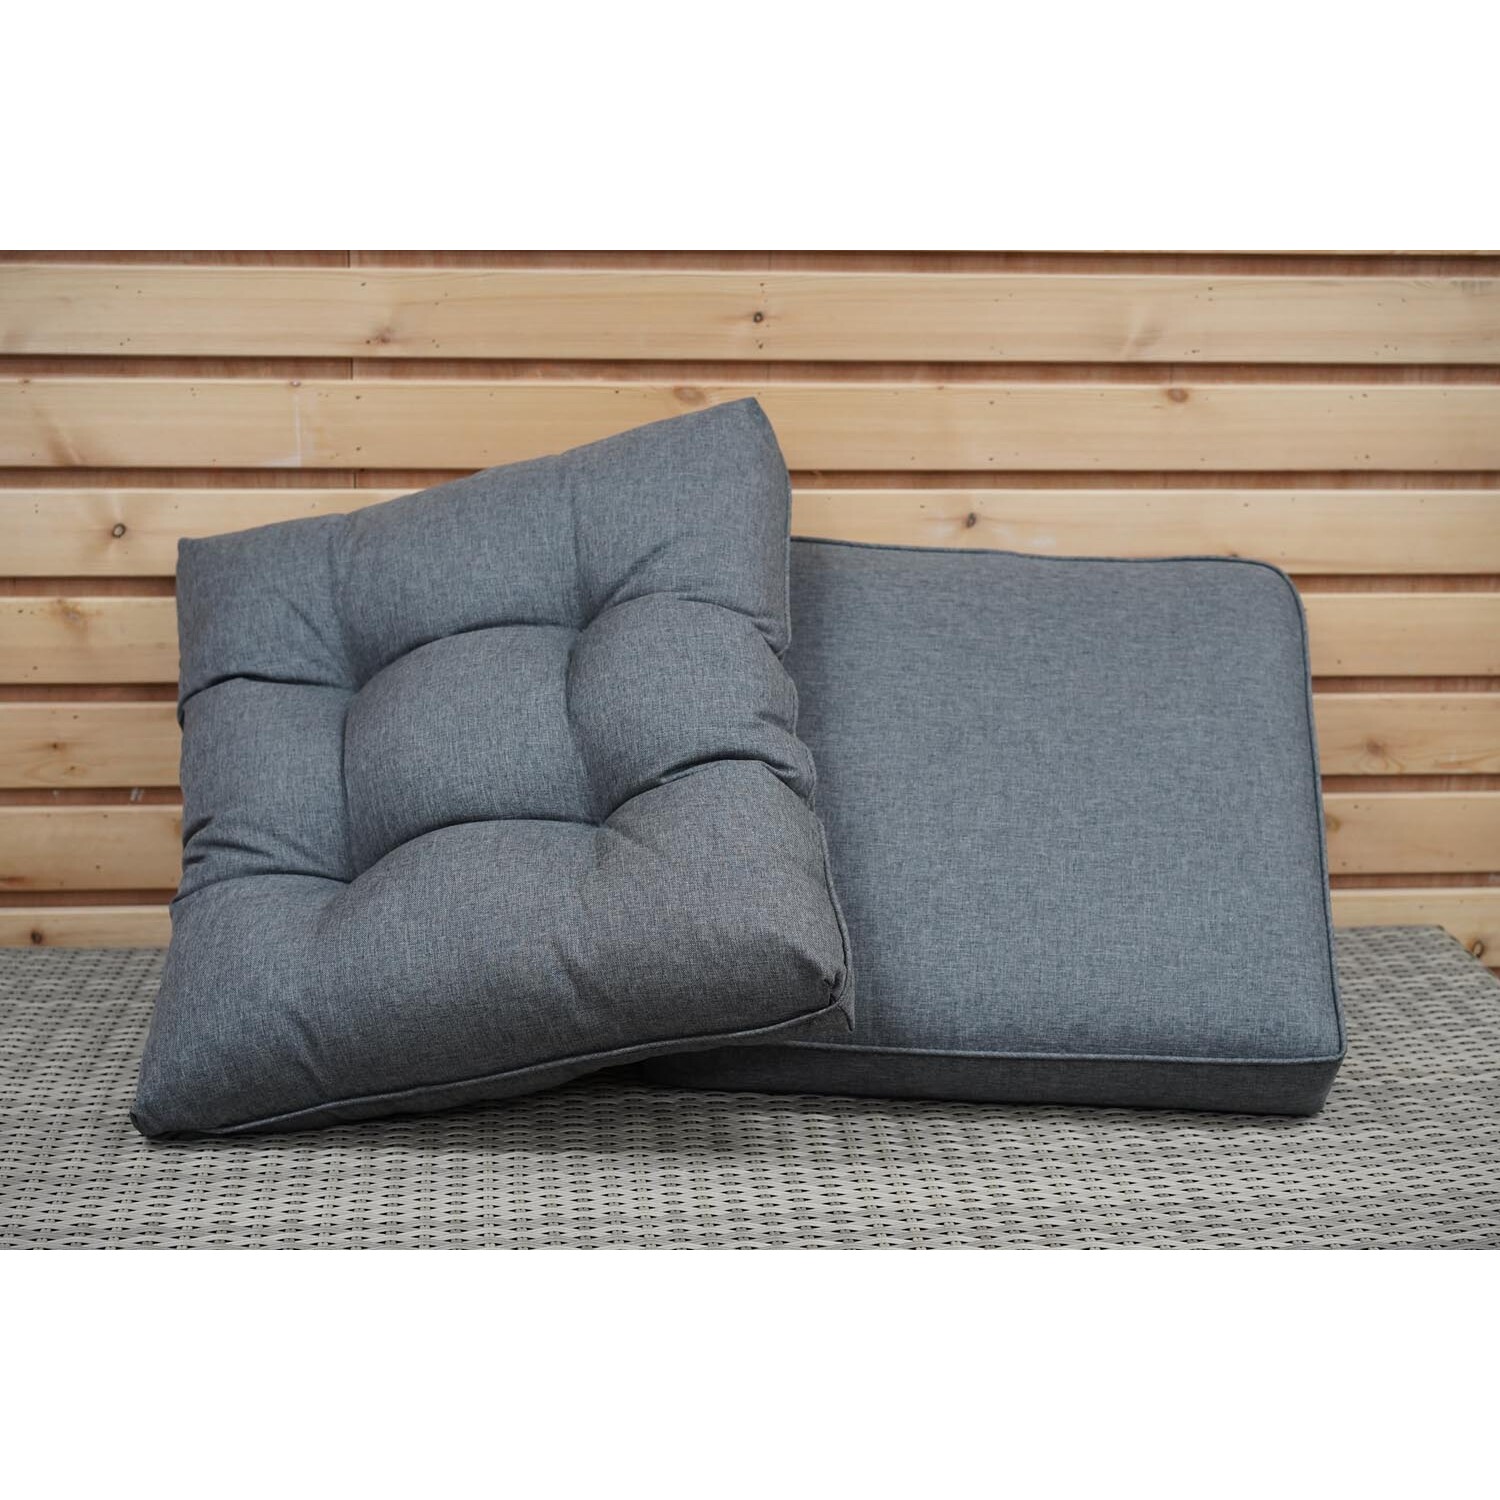 Malay Deluxe Cambridge Cushions - Grey Image 2